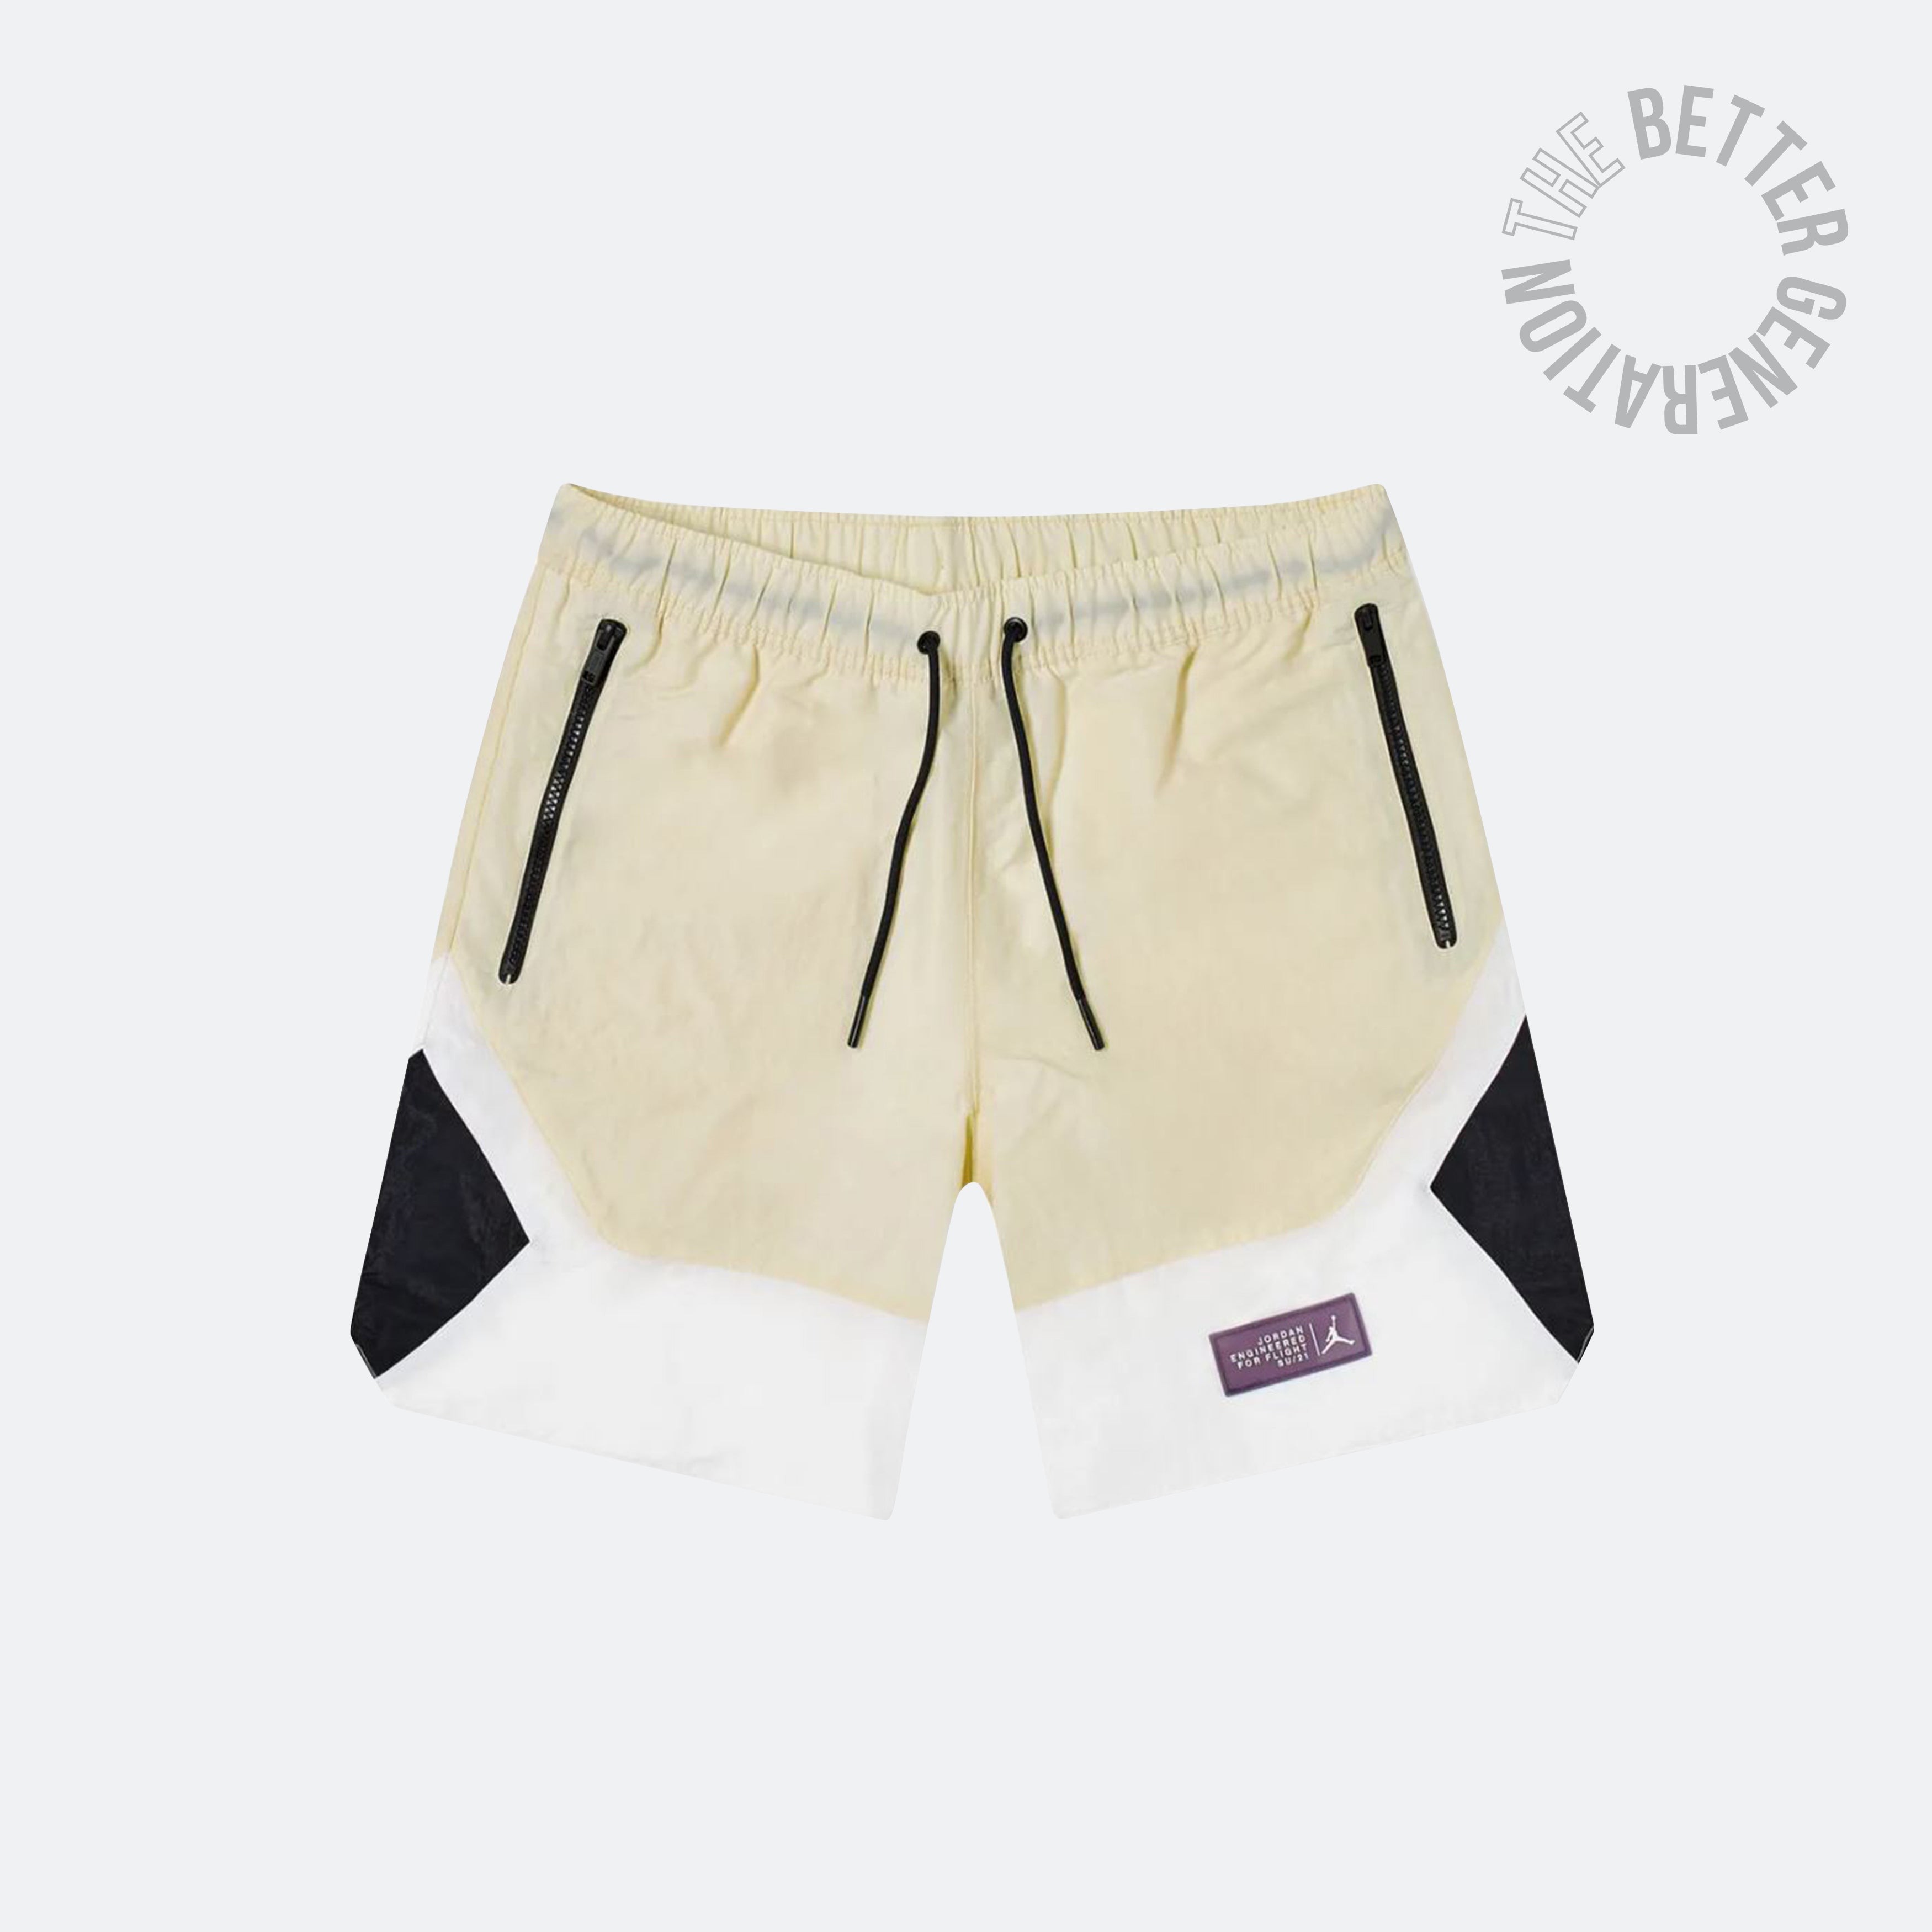 Nba Shorts Zipper Pockets, Shorts Men Bermuda Jordan 23